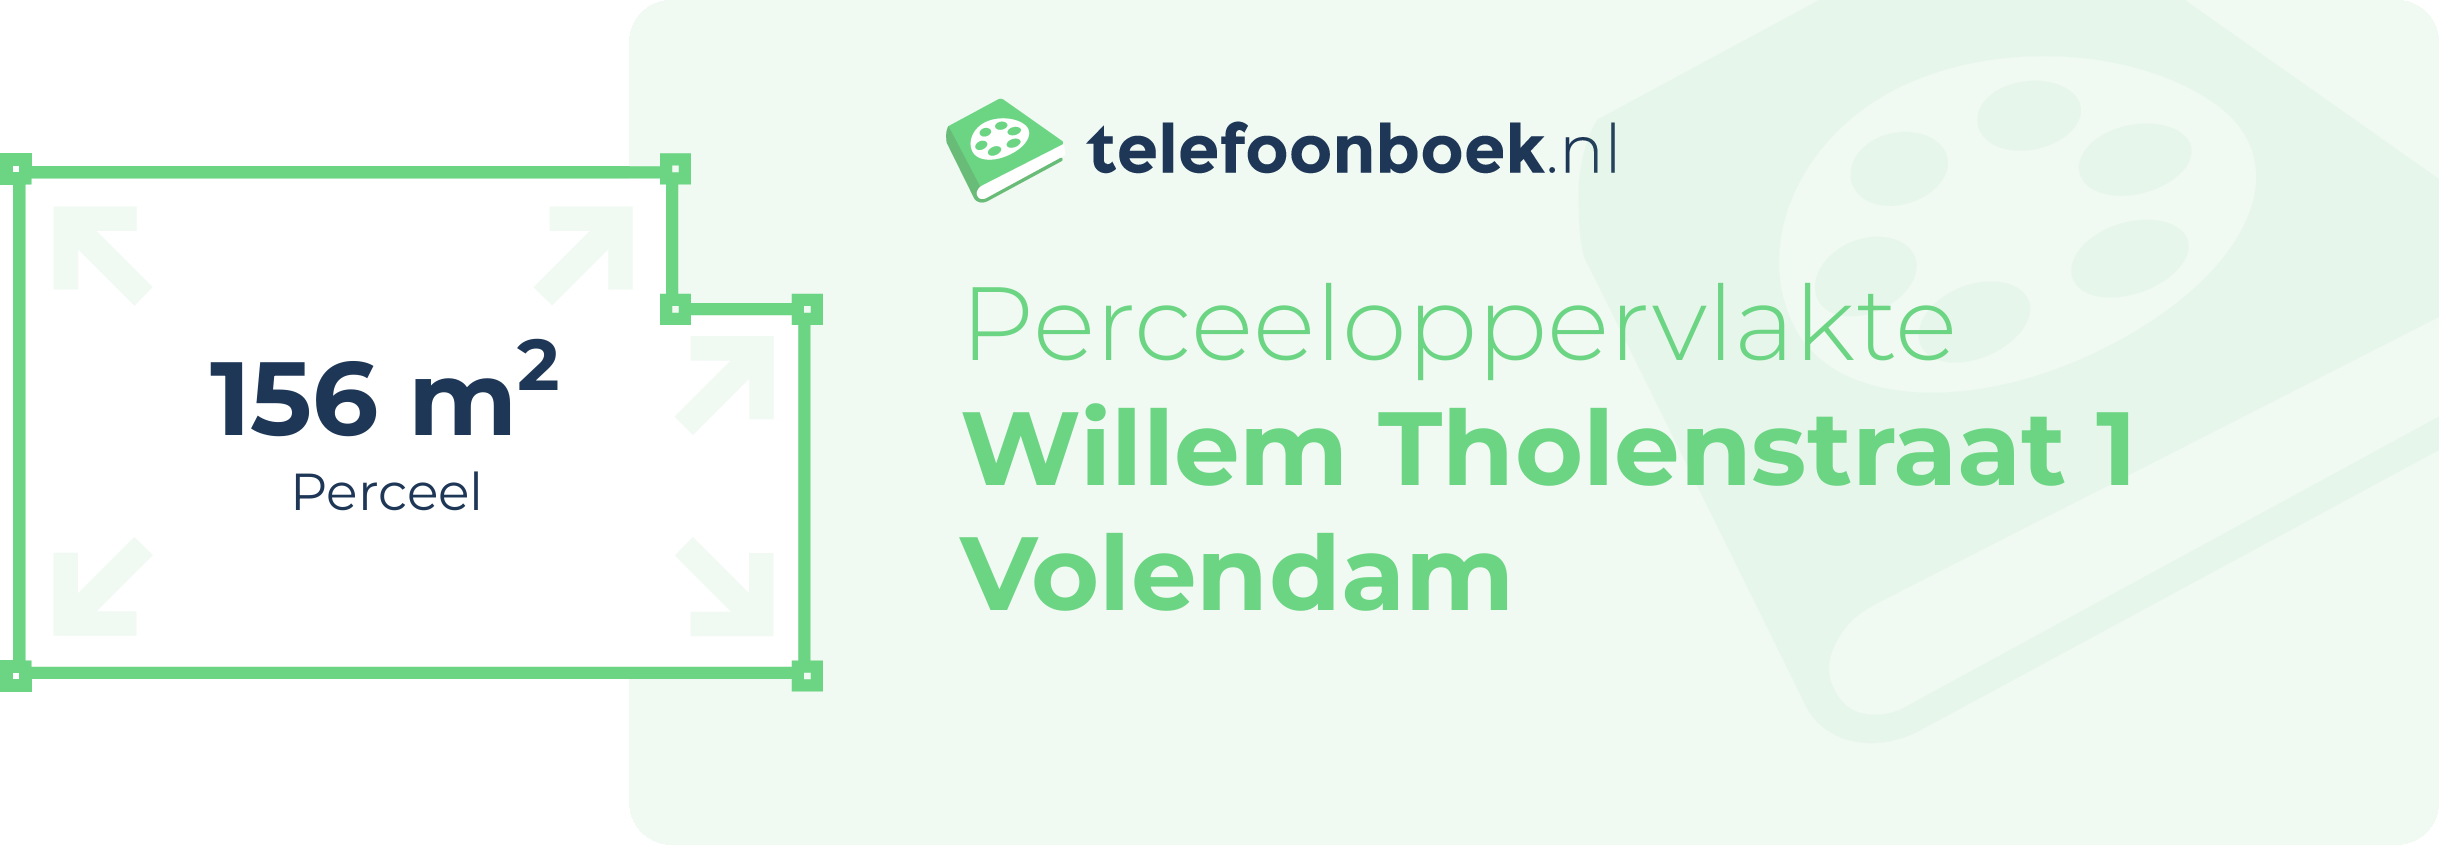 Perceeloppervlakte Willem Tholenstraat 1 Volendam